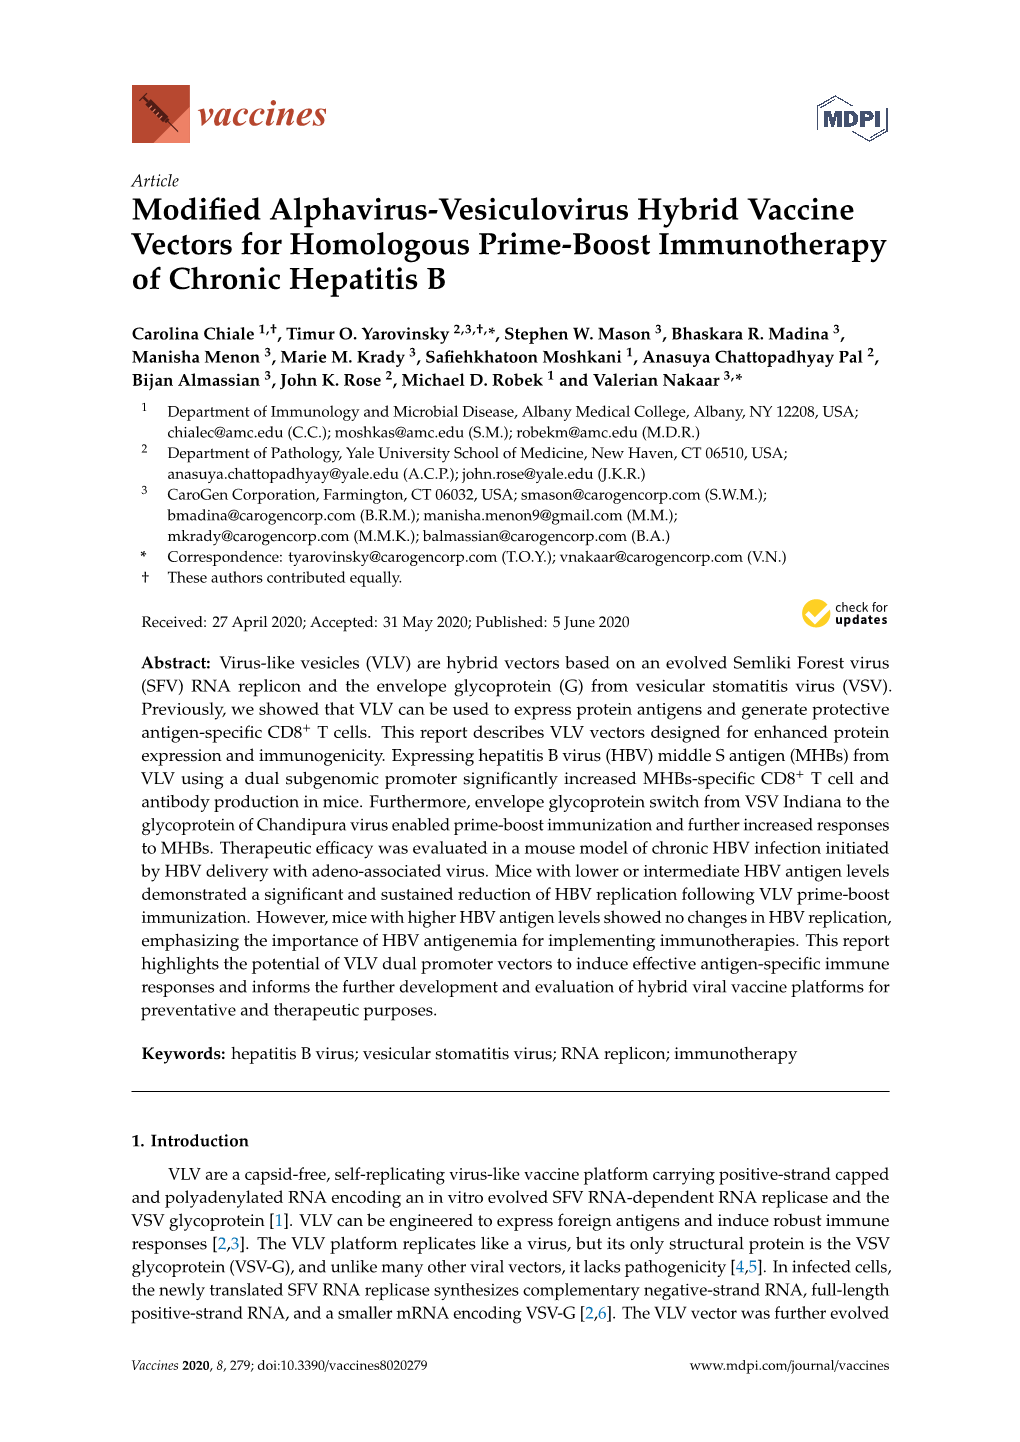 Modified Alphavirus-Vesiculovirus Hybrid Vaccine Vectors for Homologous Prime-Boost Immunotherapy of Chronic Hepatitis B